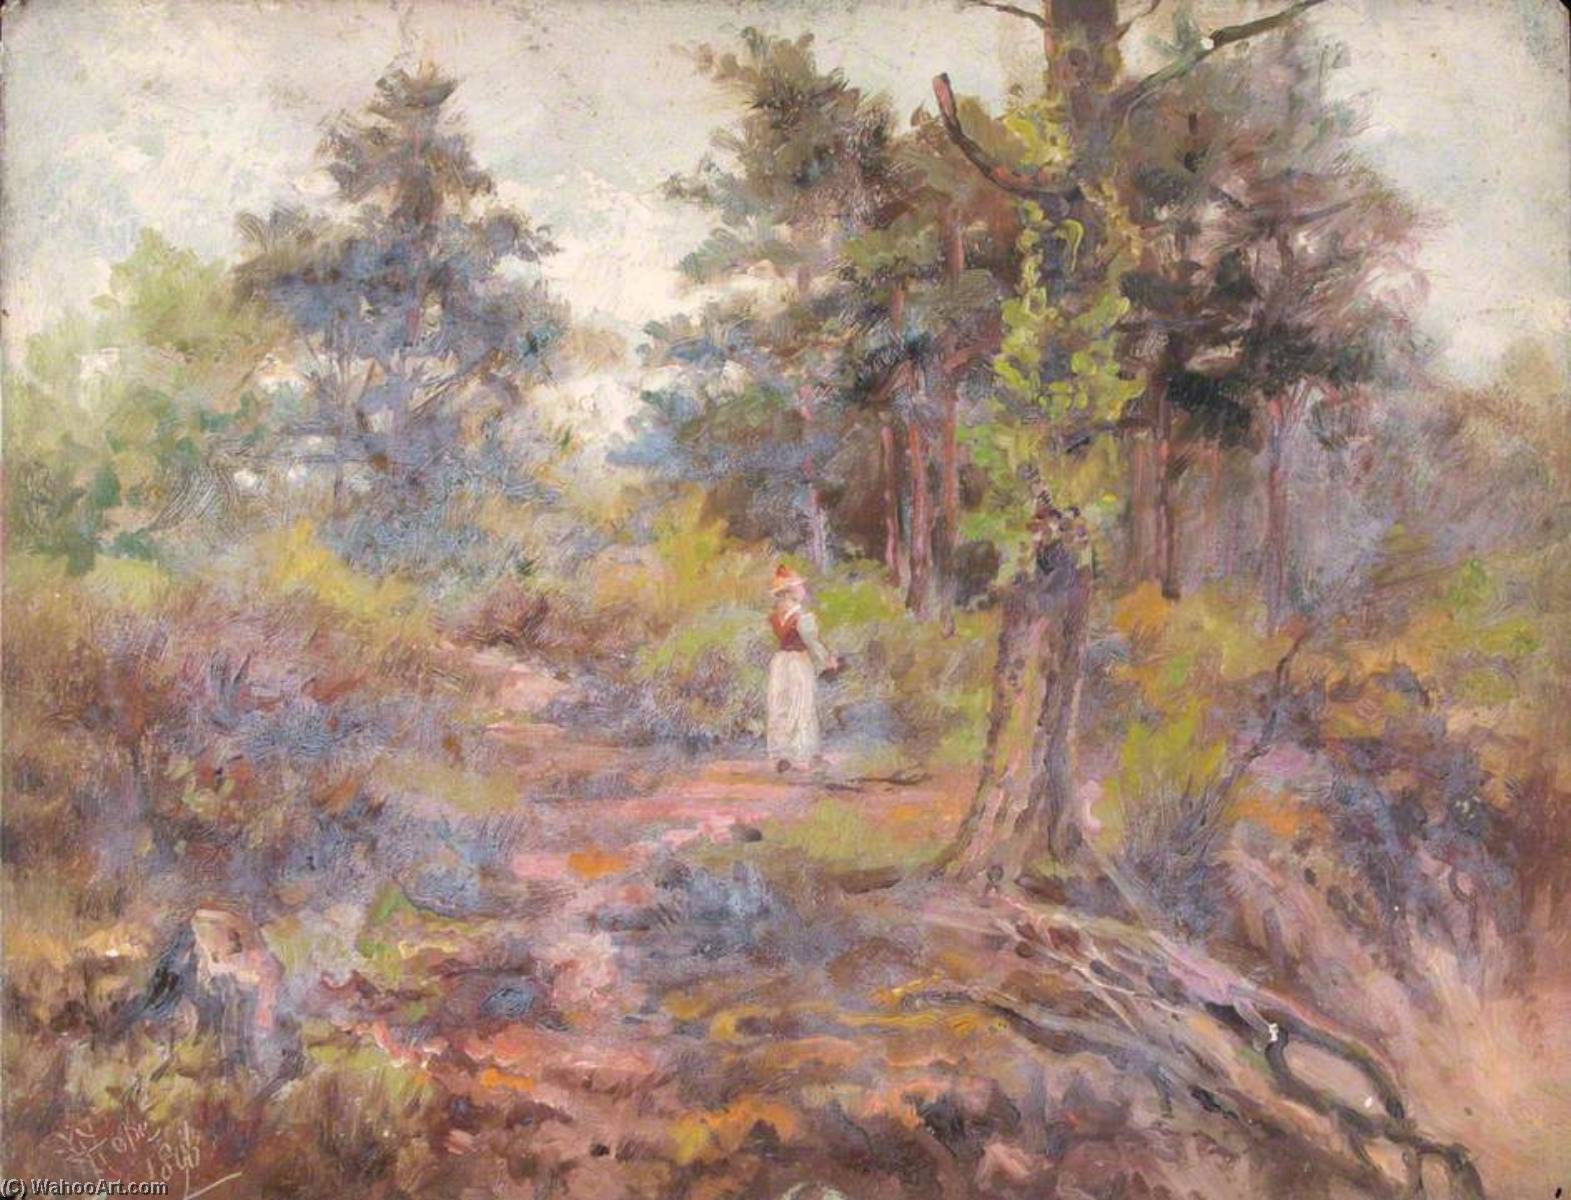 Achat Reproductions D'art Haut de la fosse, Croham Hurst, Croydon, Surrey, 1896 de William Henry Hope (1835-1917) | ArtsDot.com